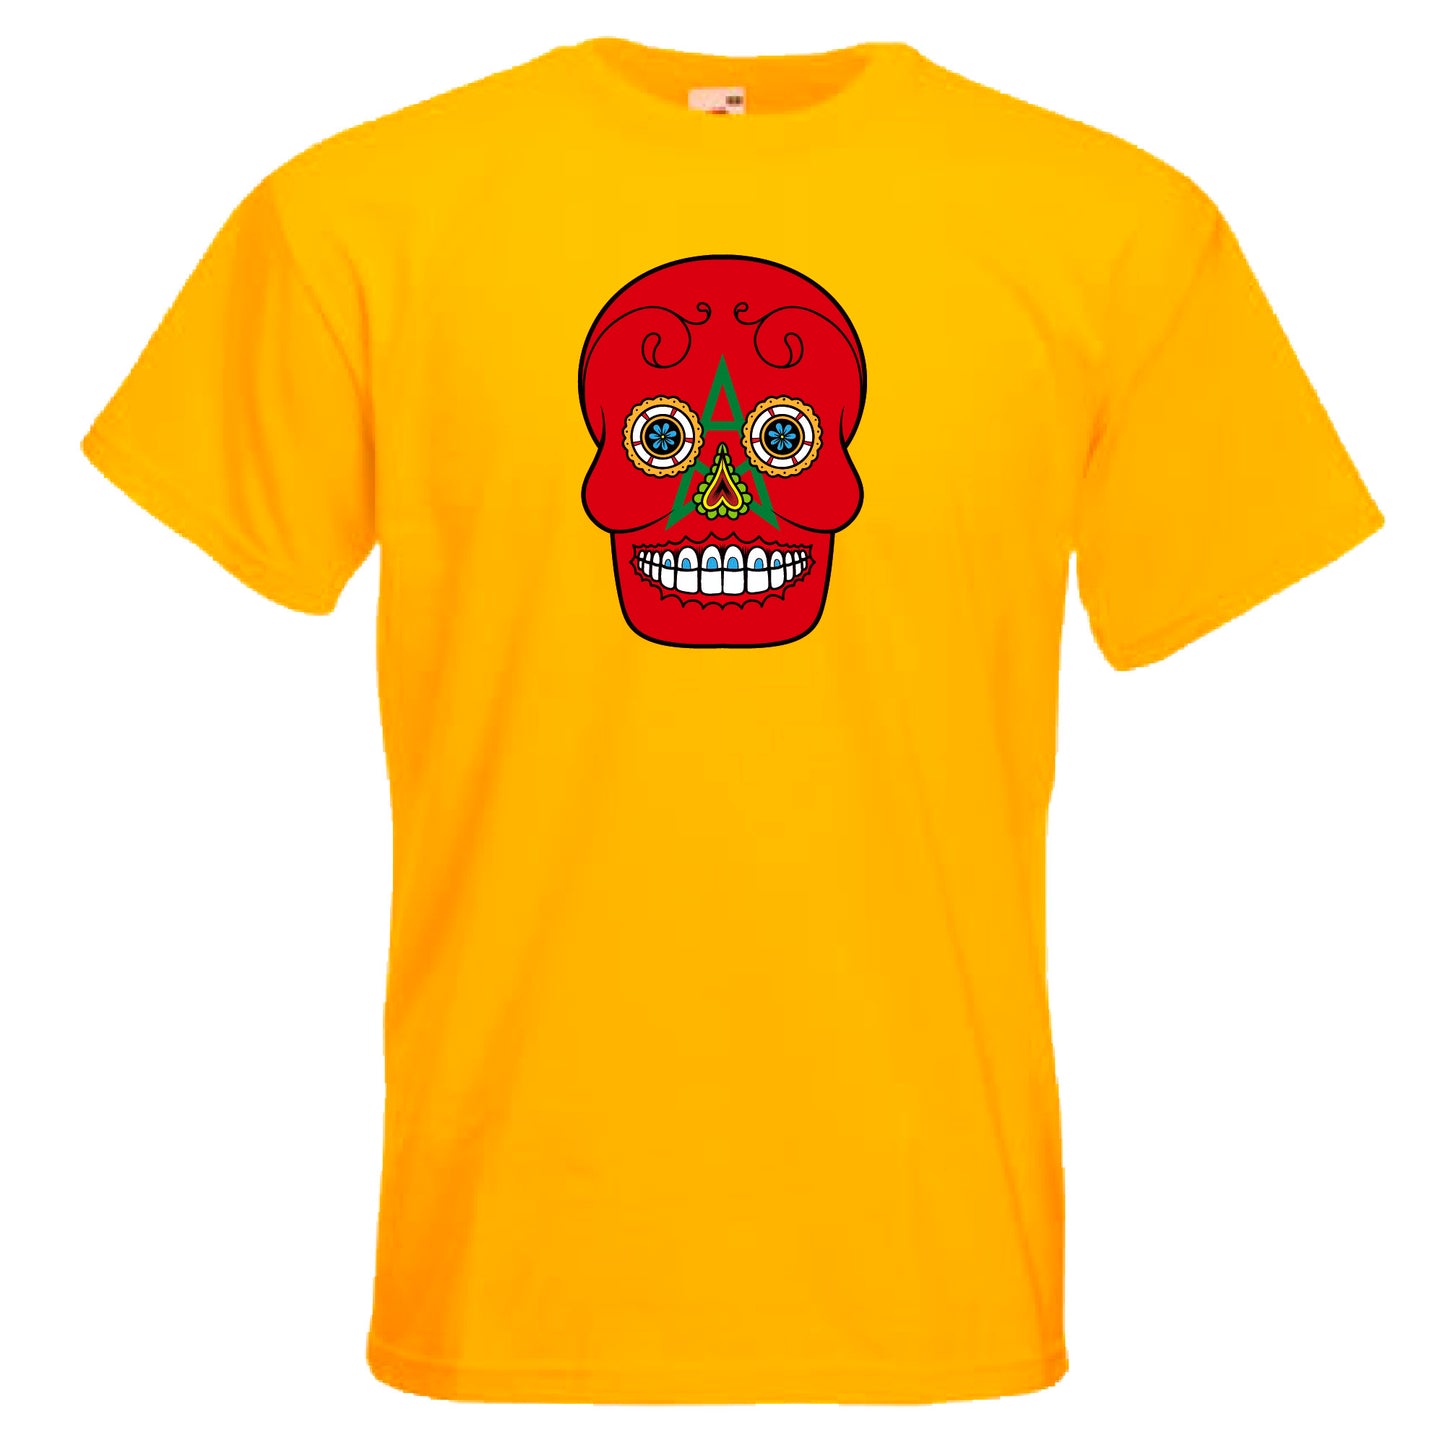 INDIGOS UG - T-Shirt Herren - Marokko - Skull - Fussball